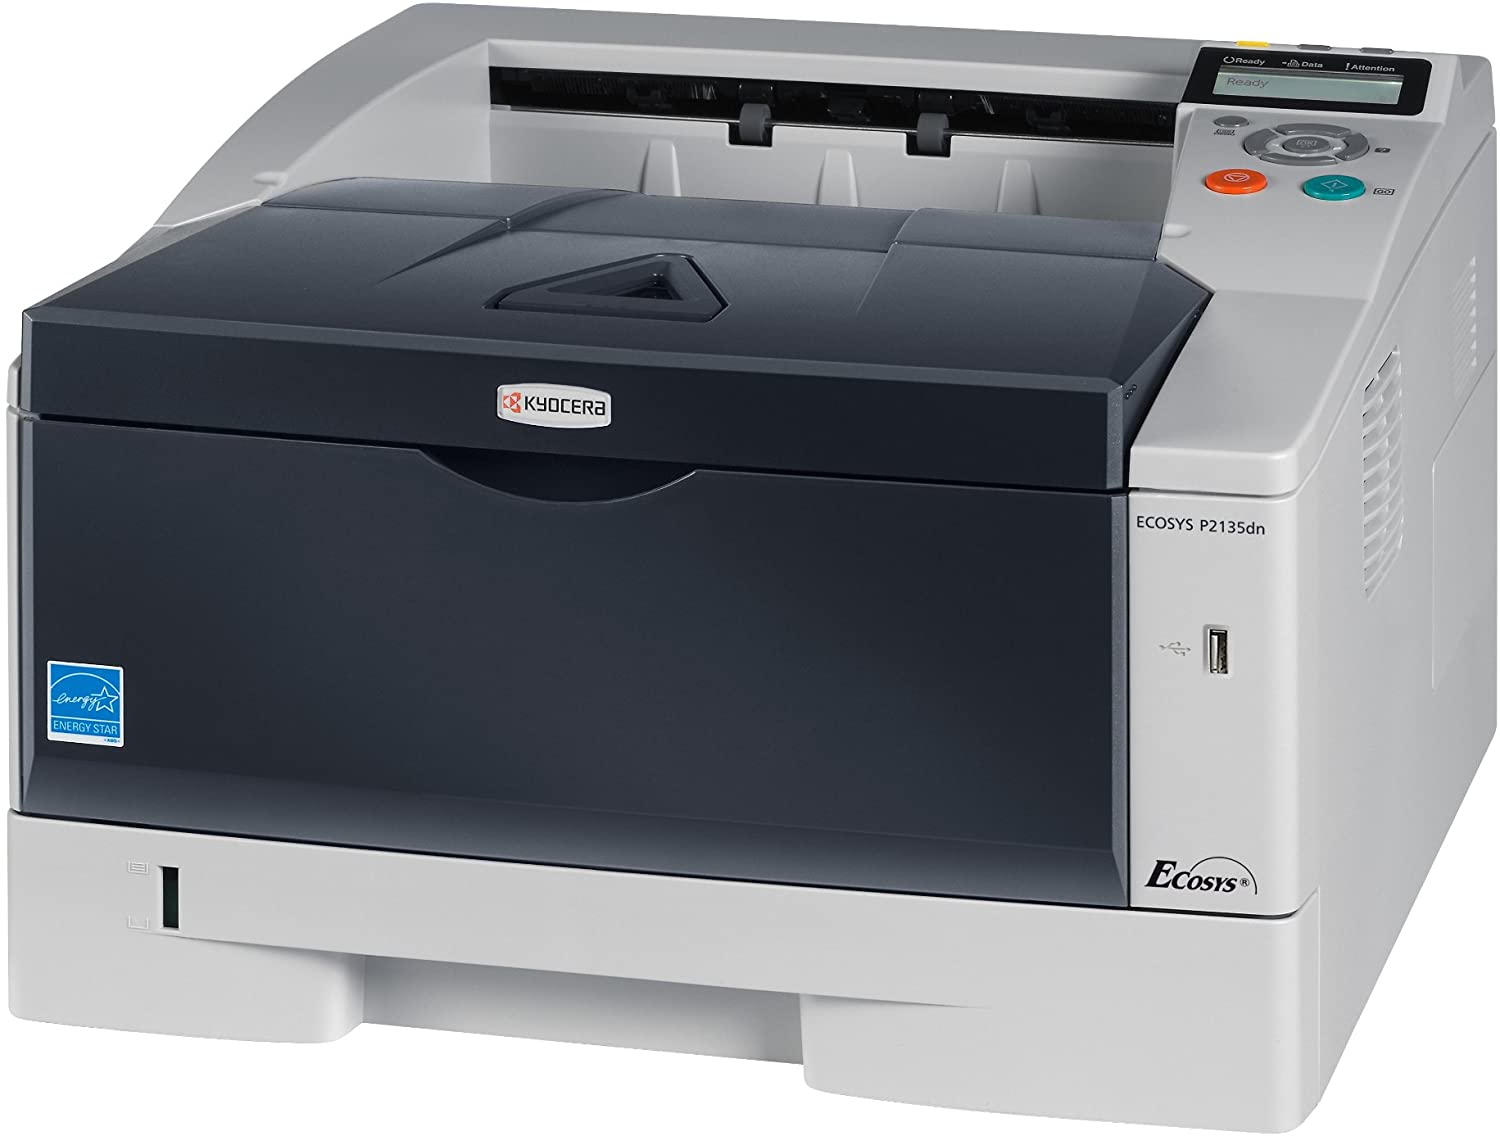 KYOCERA Ecosys p2135dn A4 SW – Monochrome laser printer